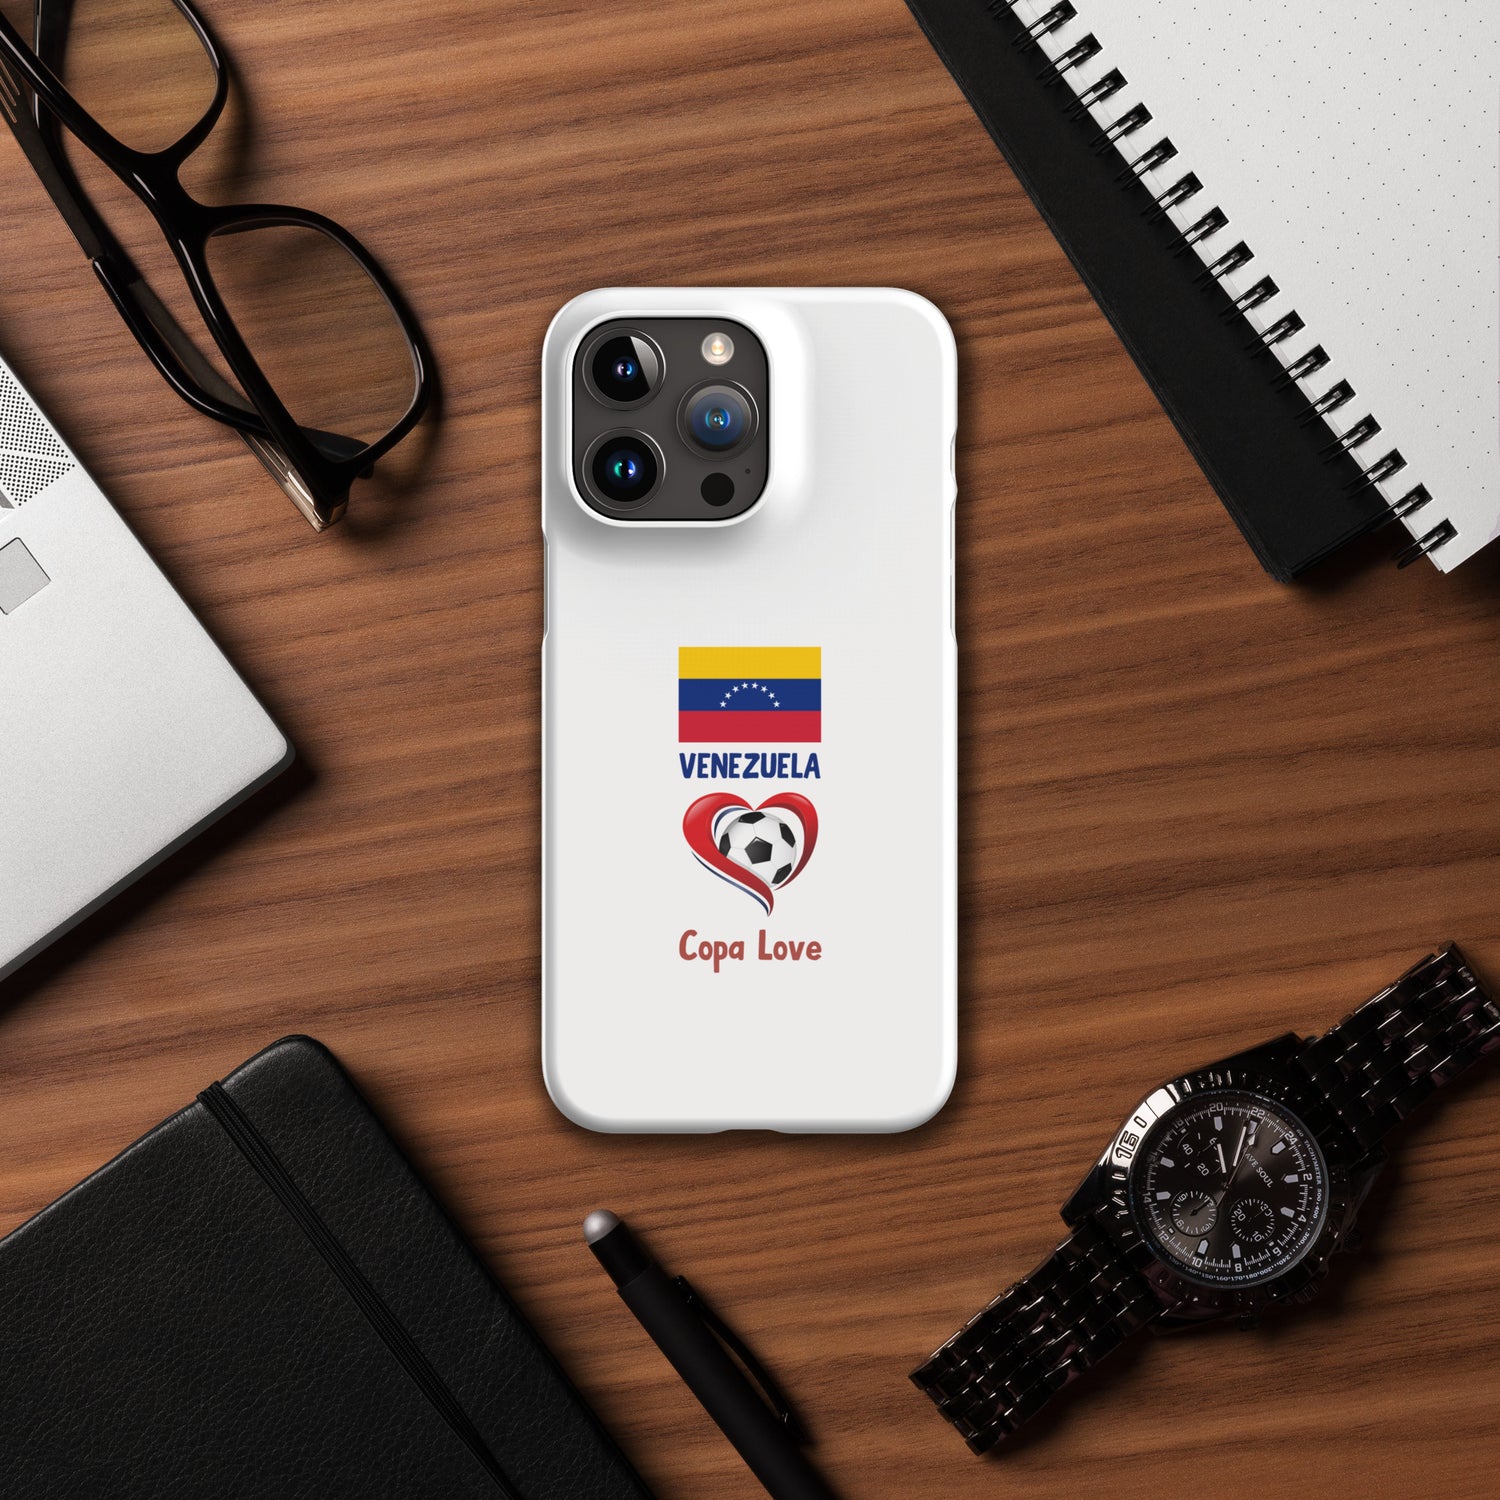 VENEZUELA - Copa Love Snap case for iPhone